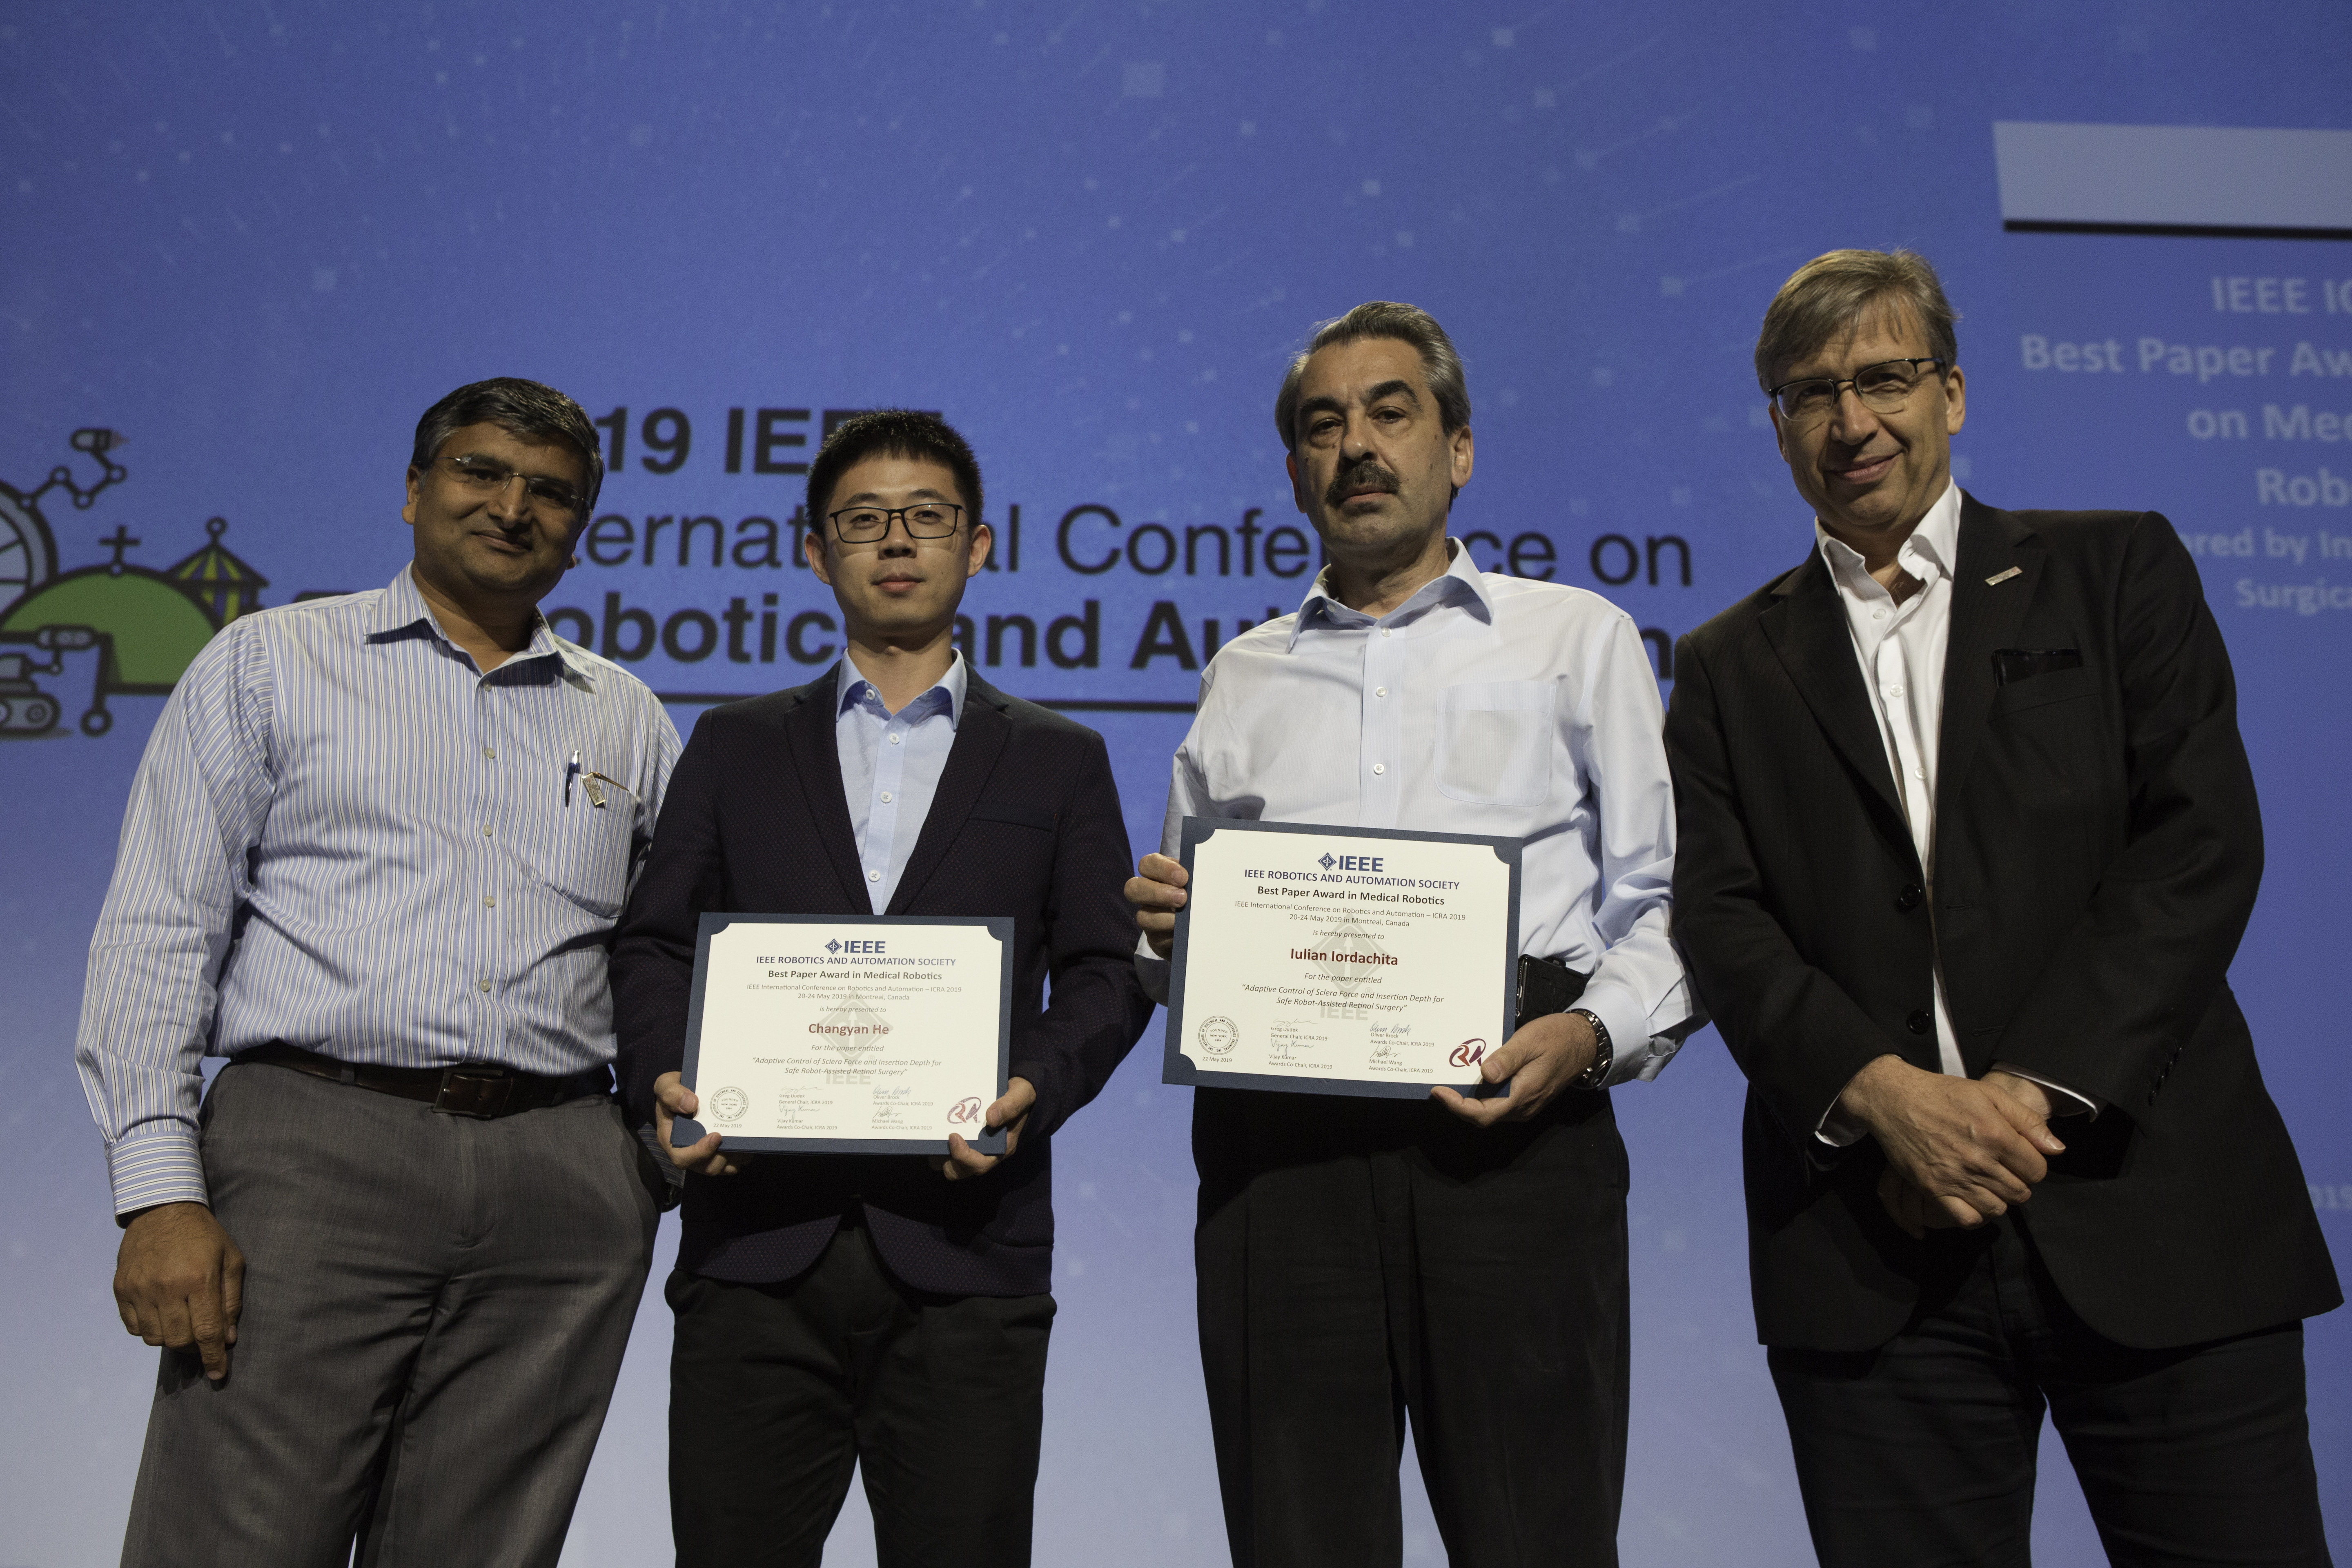 Best Paper Award in Medical Robotics